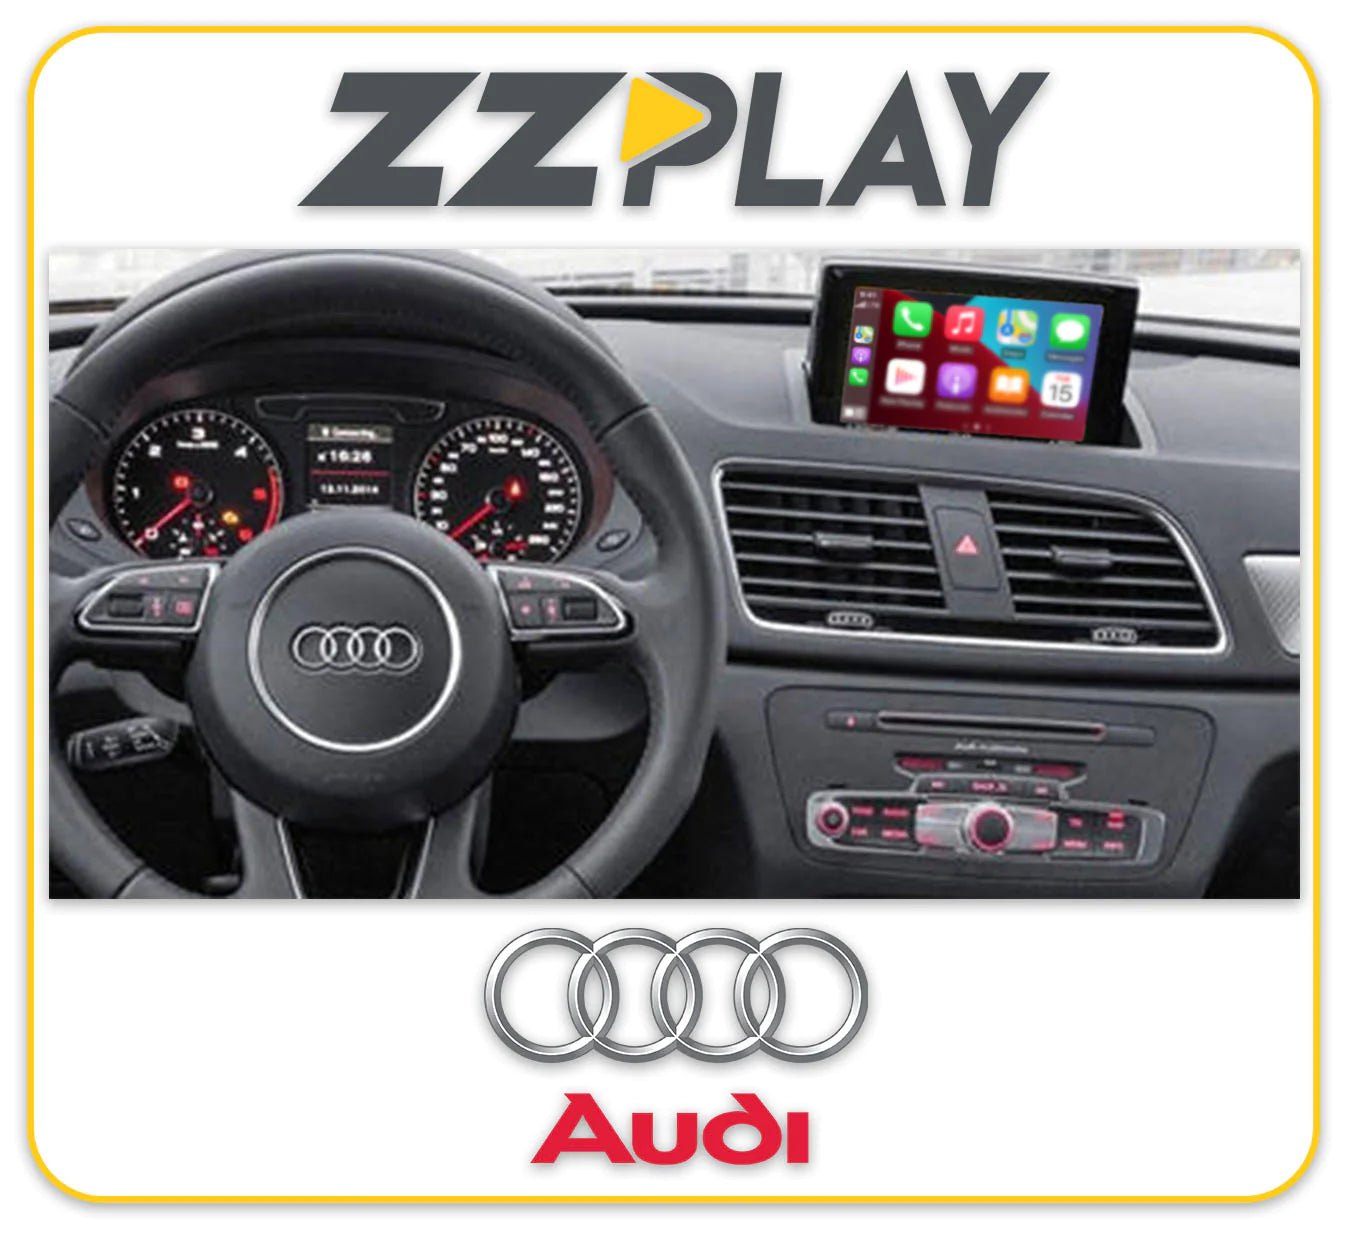 ZZ2 Audi Wireless Carplay / Android Auto System | IT3-MMI3G-Q3N WITH Navigation